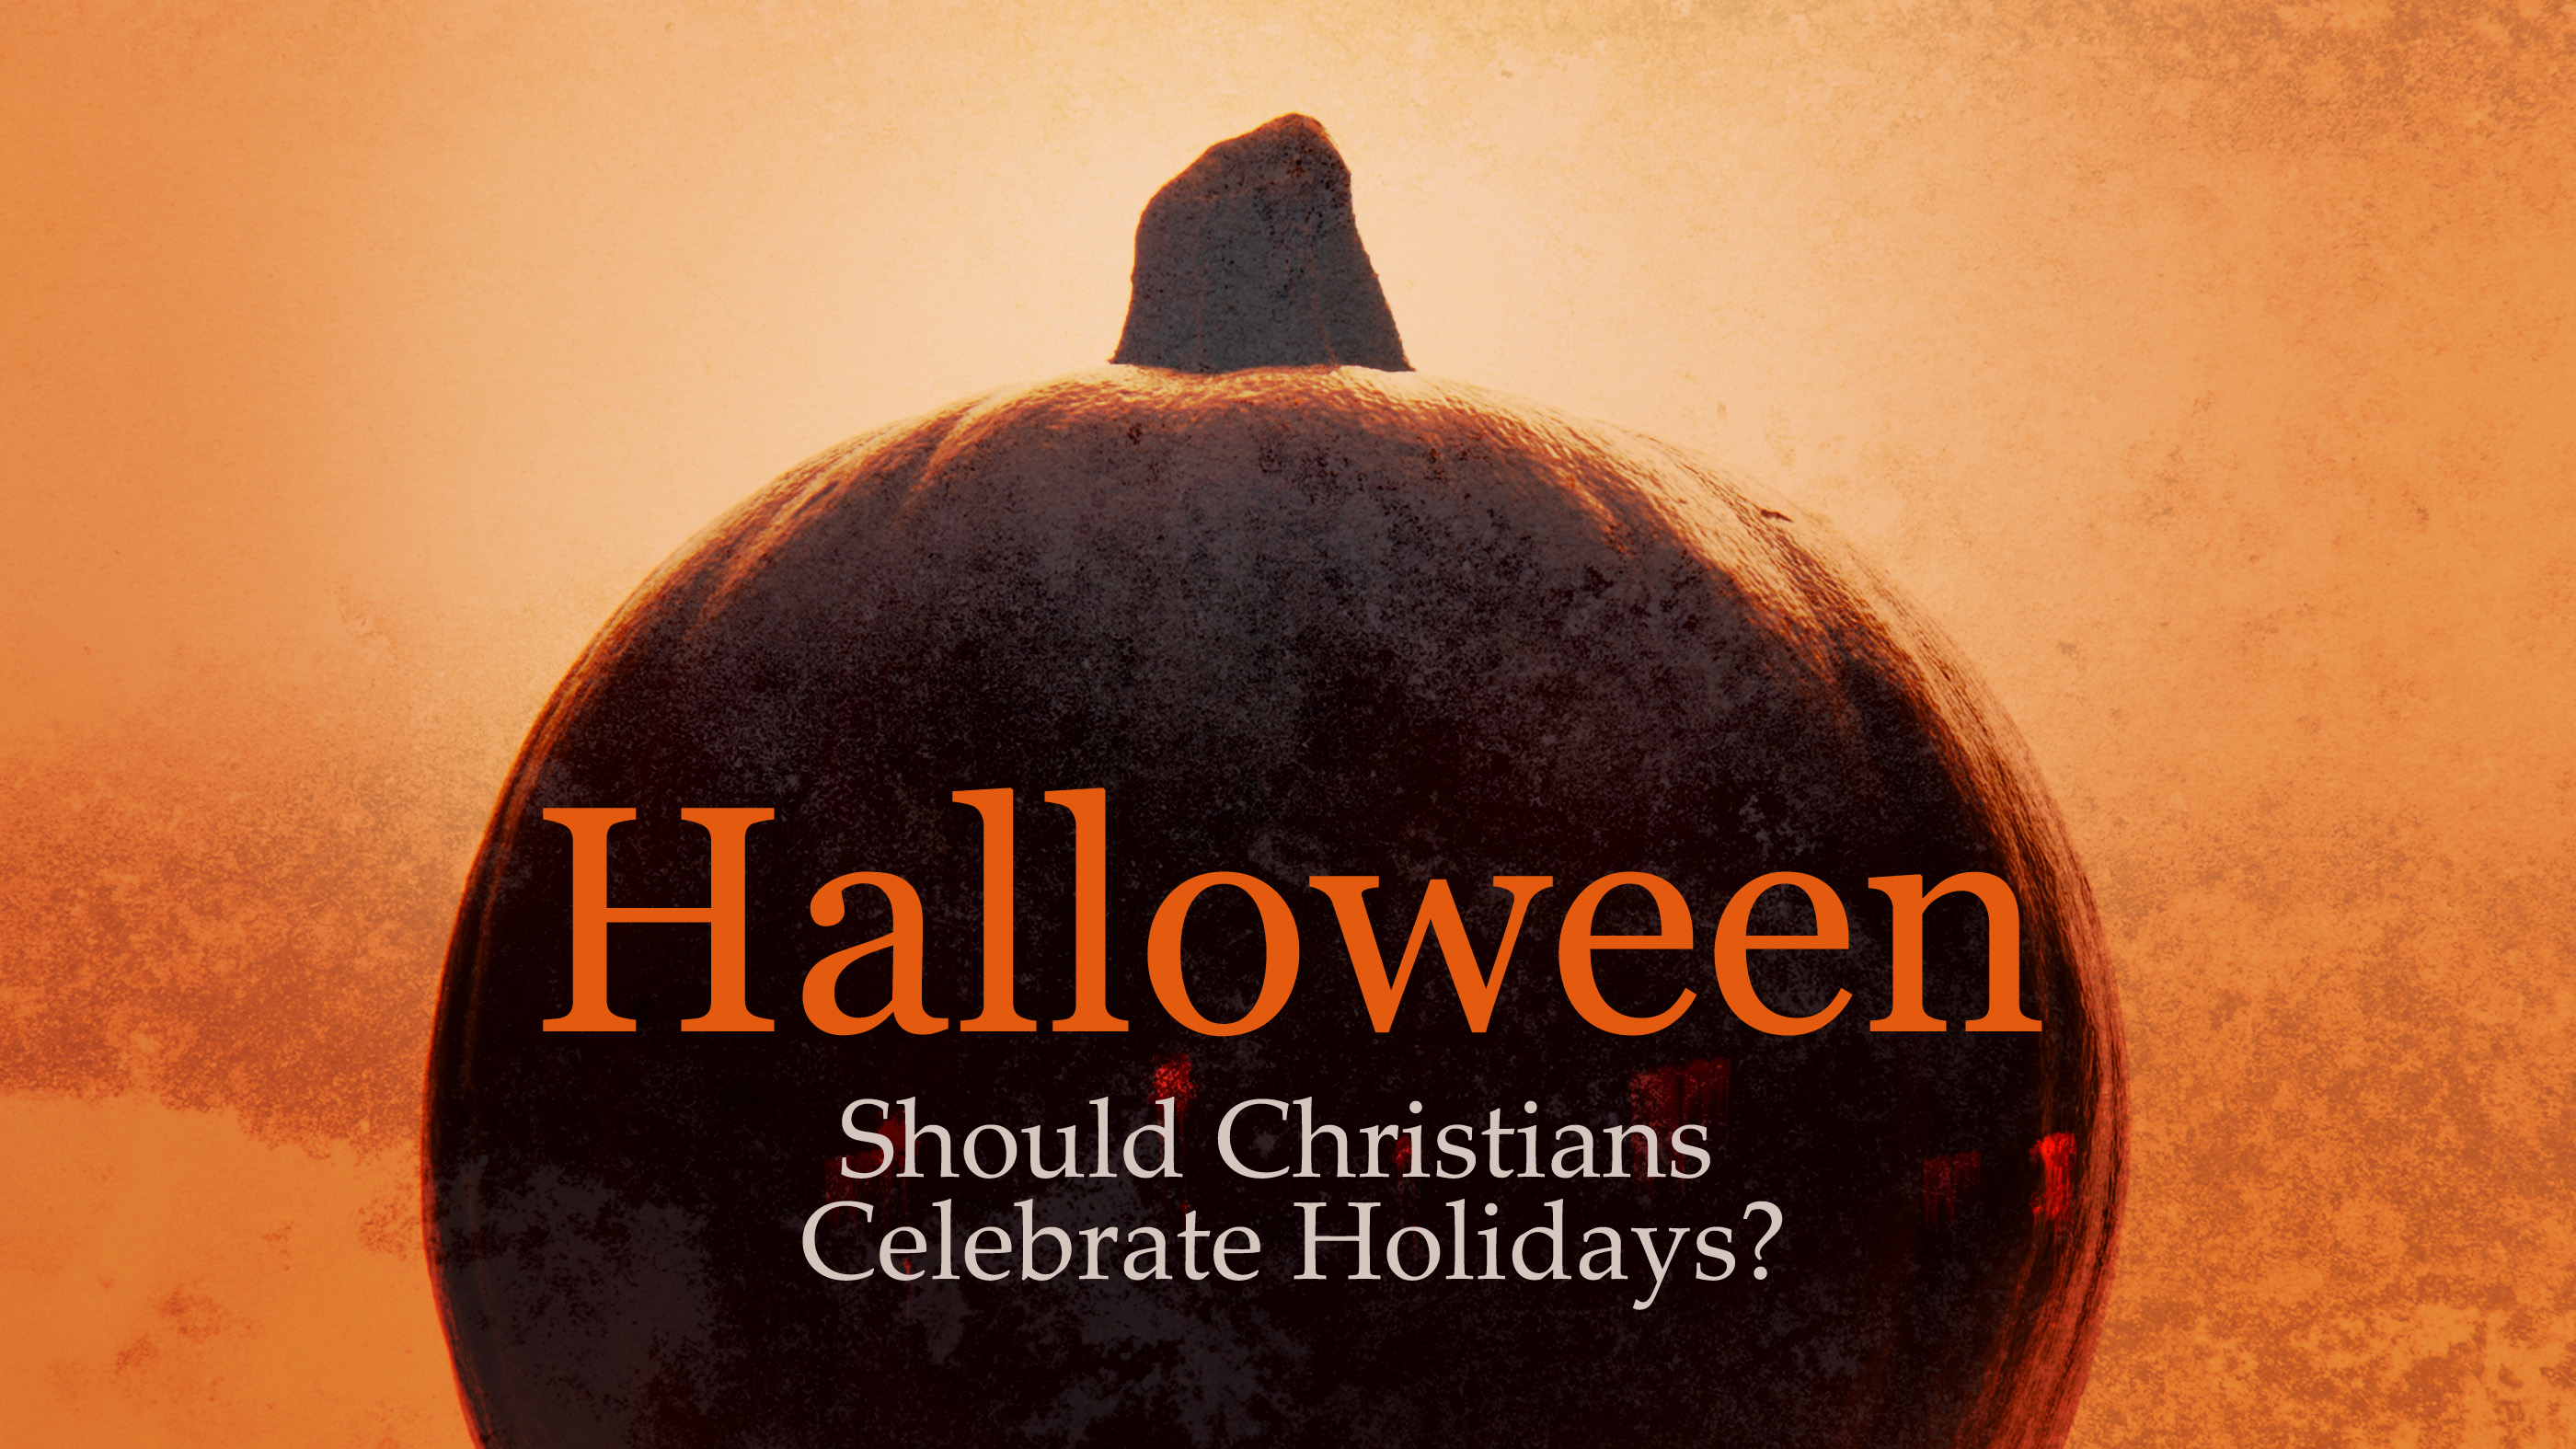 10/31/18 – “Halloween – Should Christians Celebrate Holidays?” – Shane Idleman